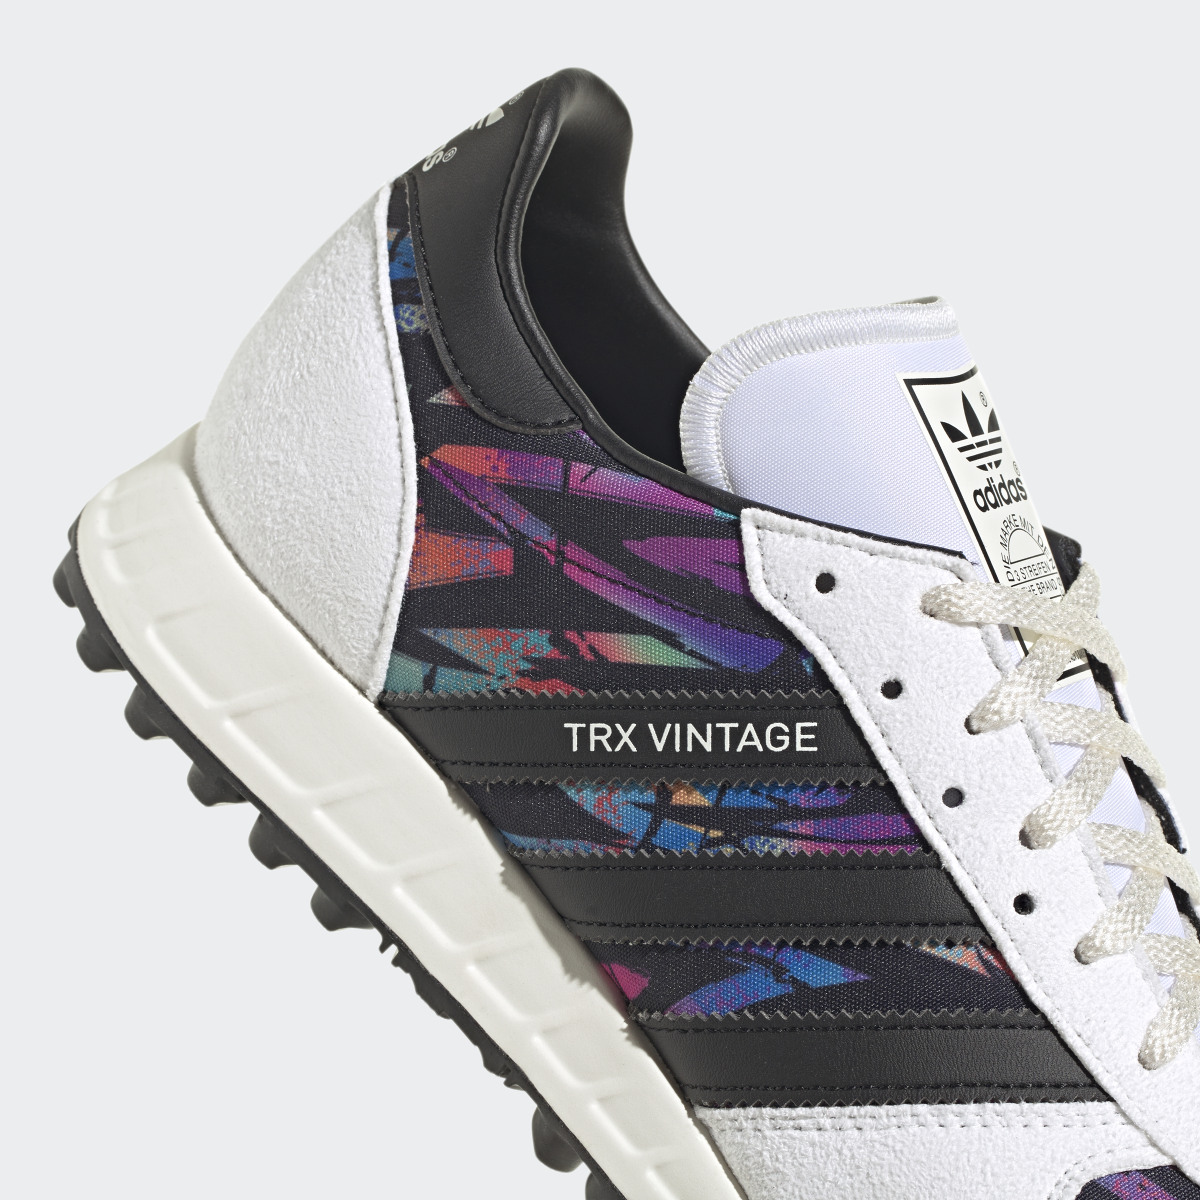 Adidas TRX Vintage Shoes. 11